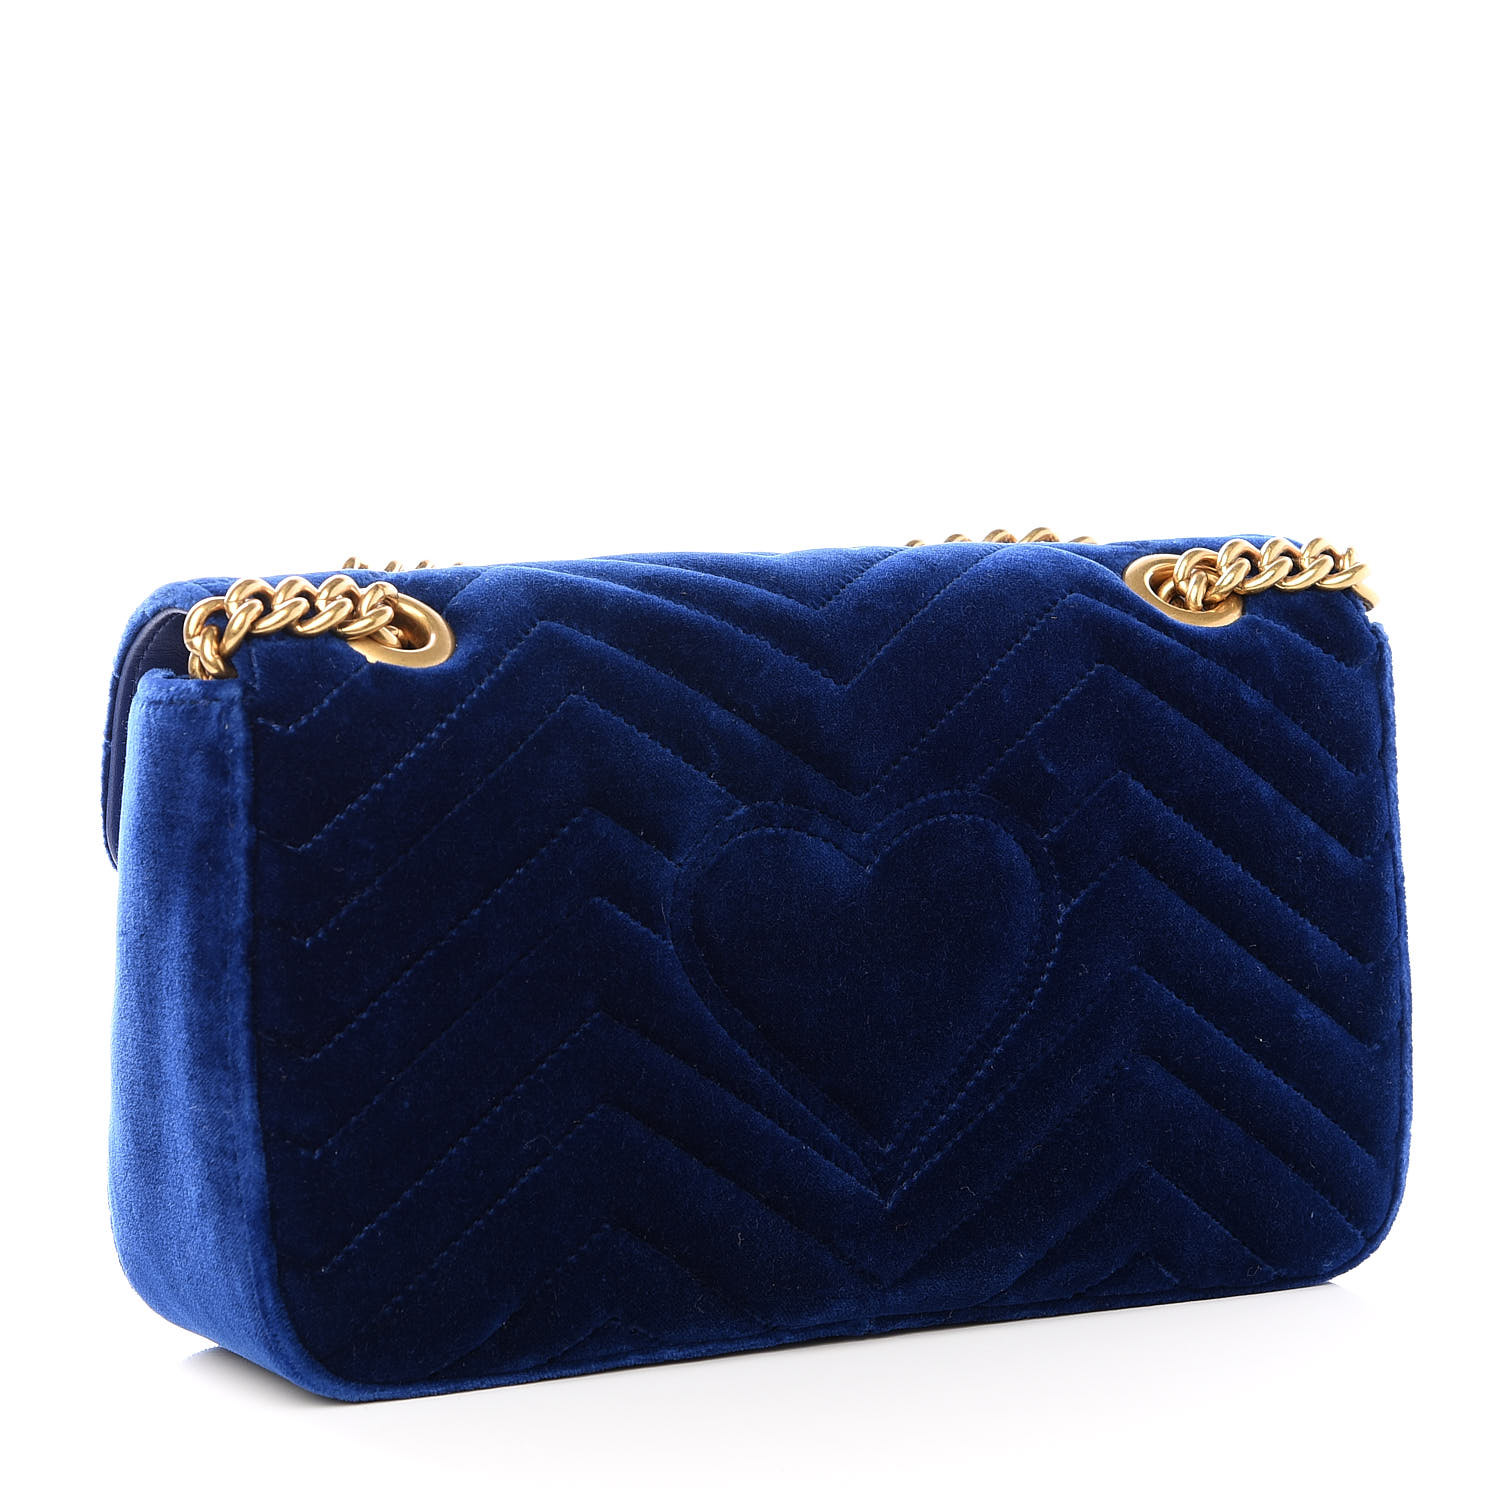 GUCCI Velvet Matelasse Small GG Marmont Shoulder Bag Cobalt Blue 572685